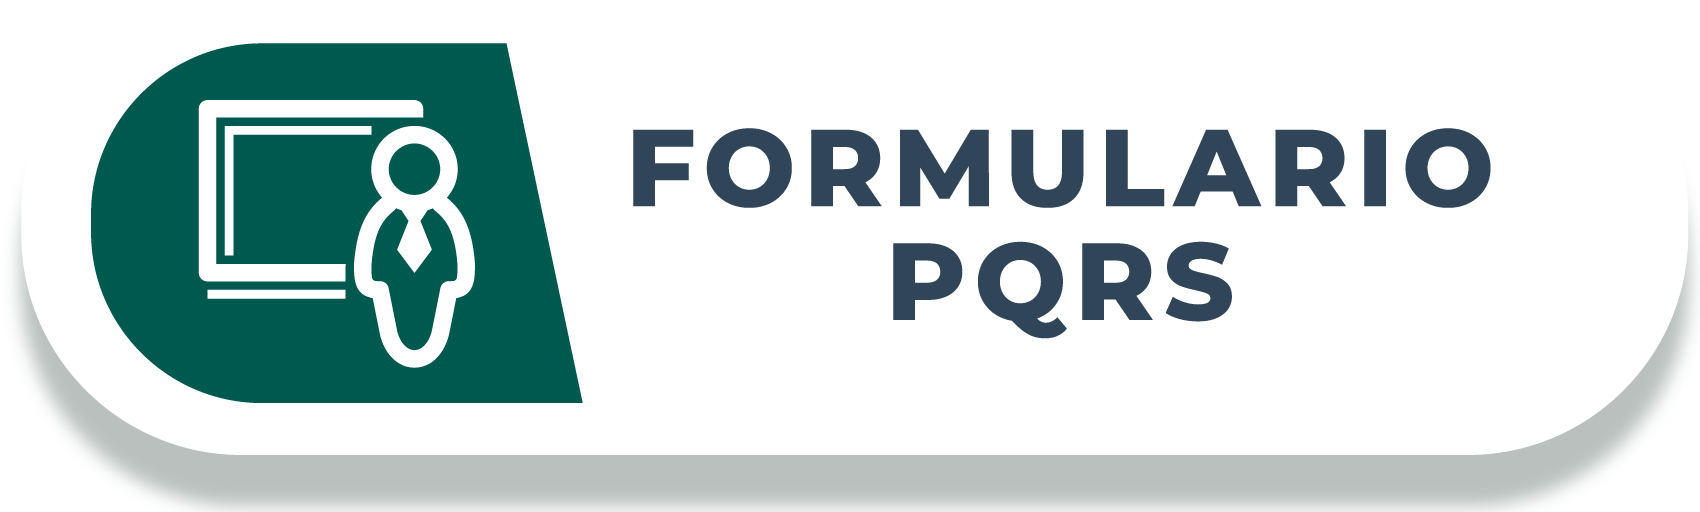 icono-formulario-pqrs1.png